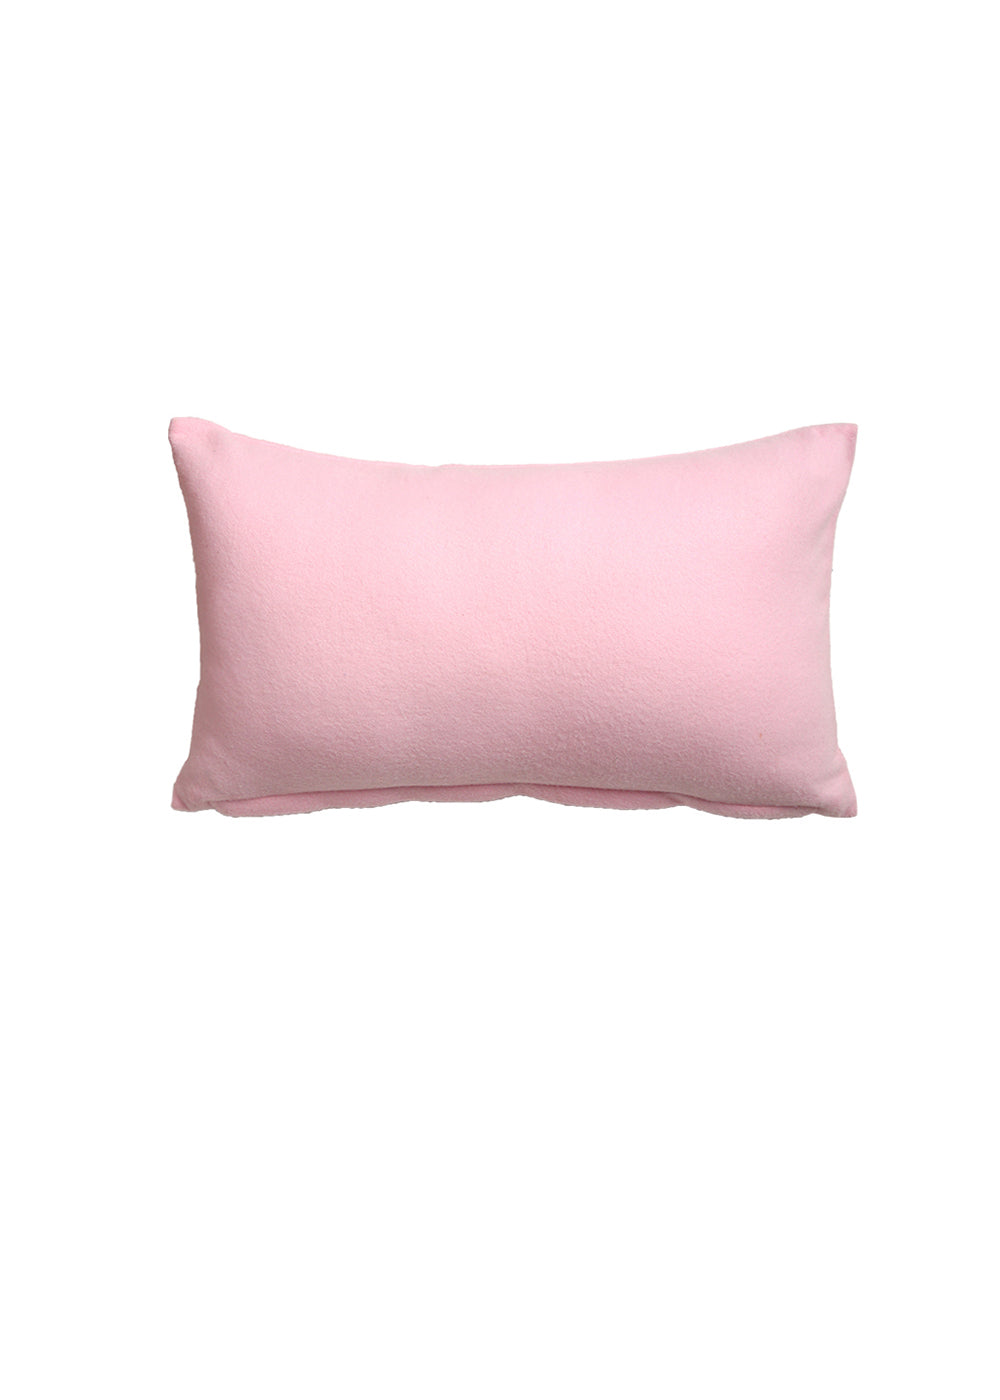 Blanc9 Blush Night Baby 30x50cm Pillow